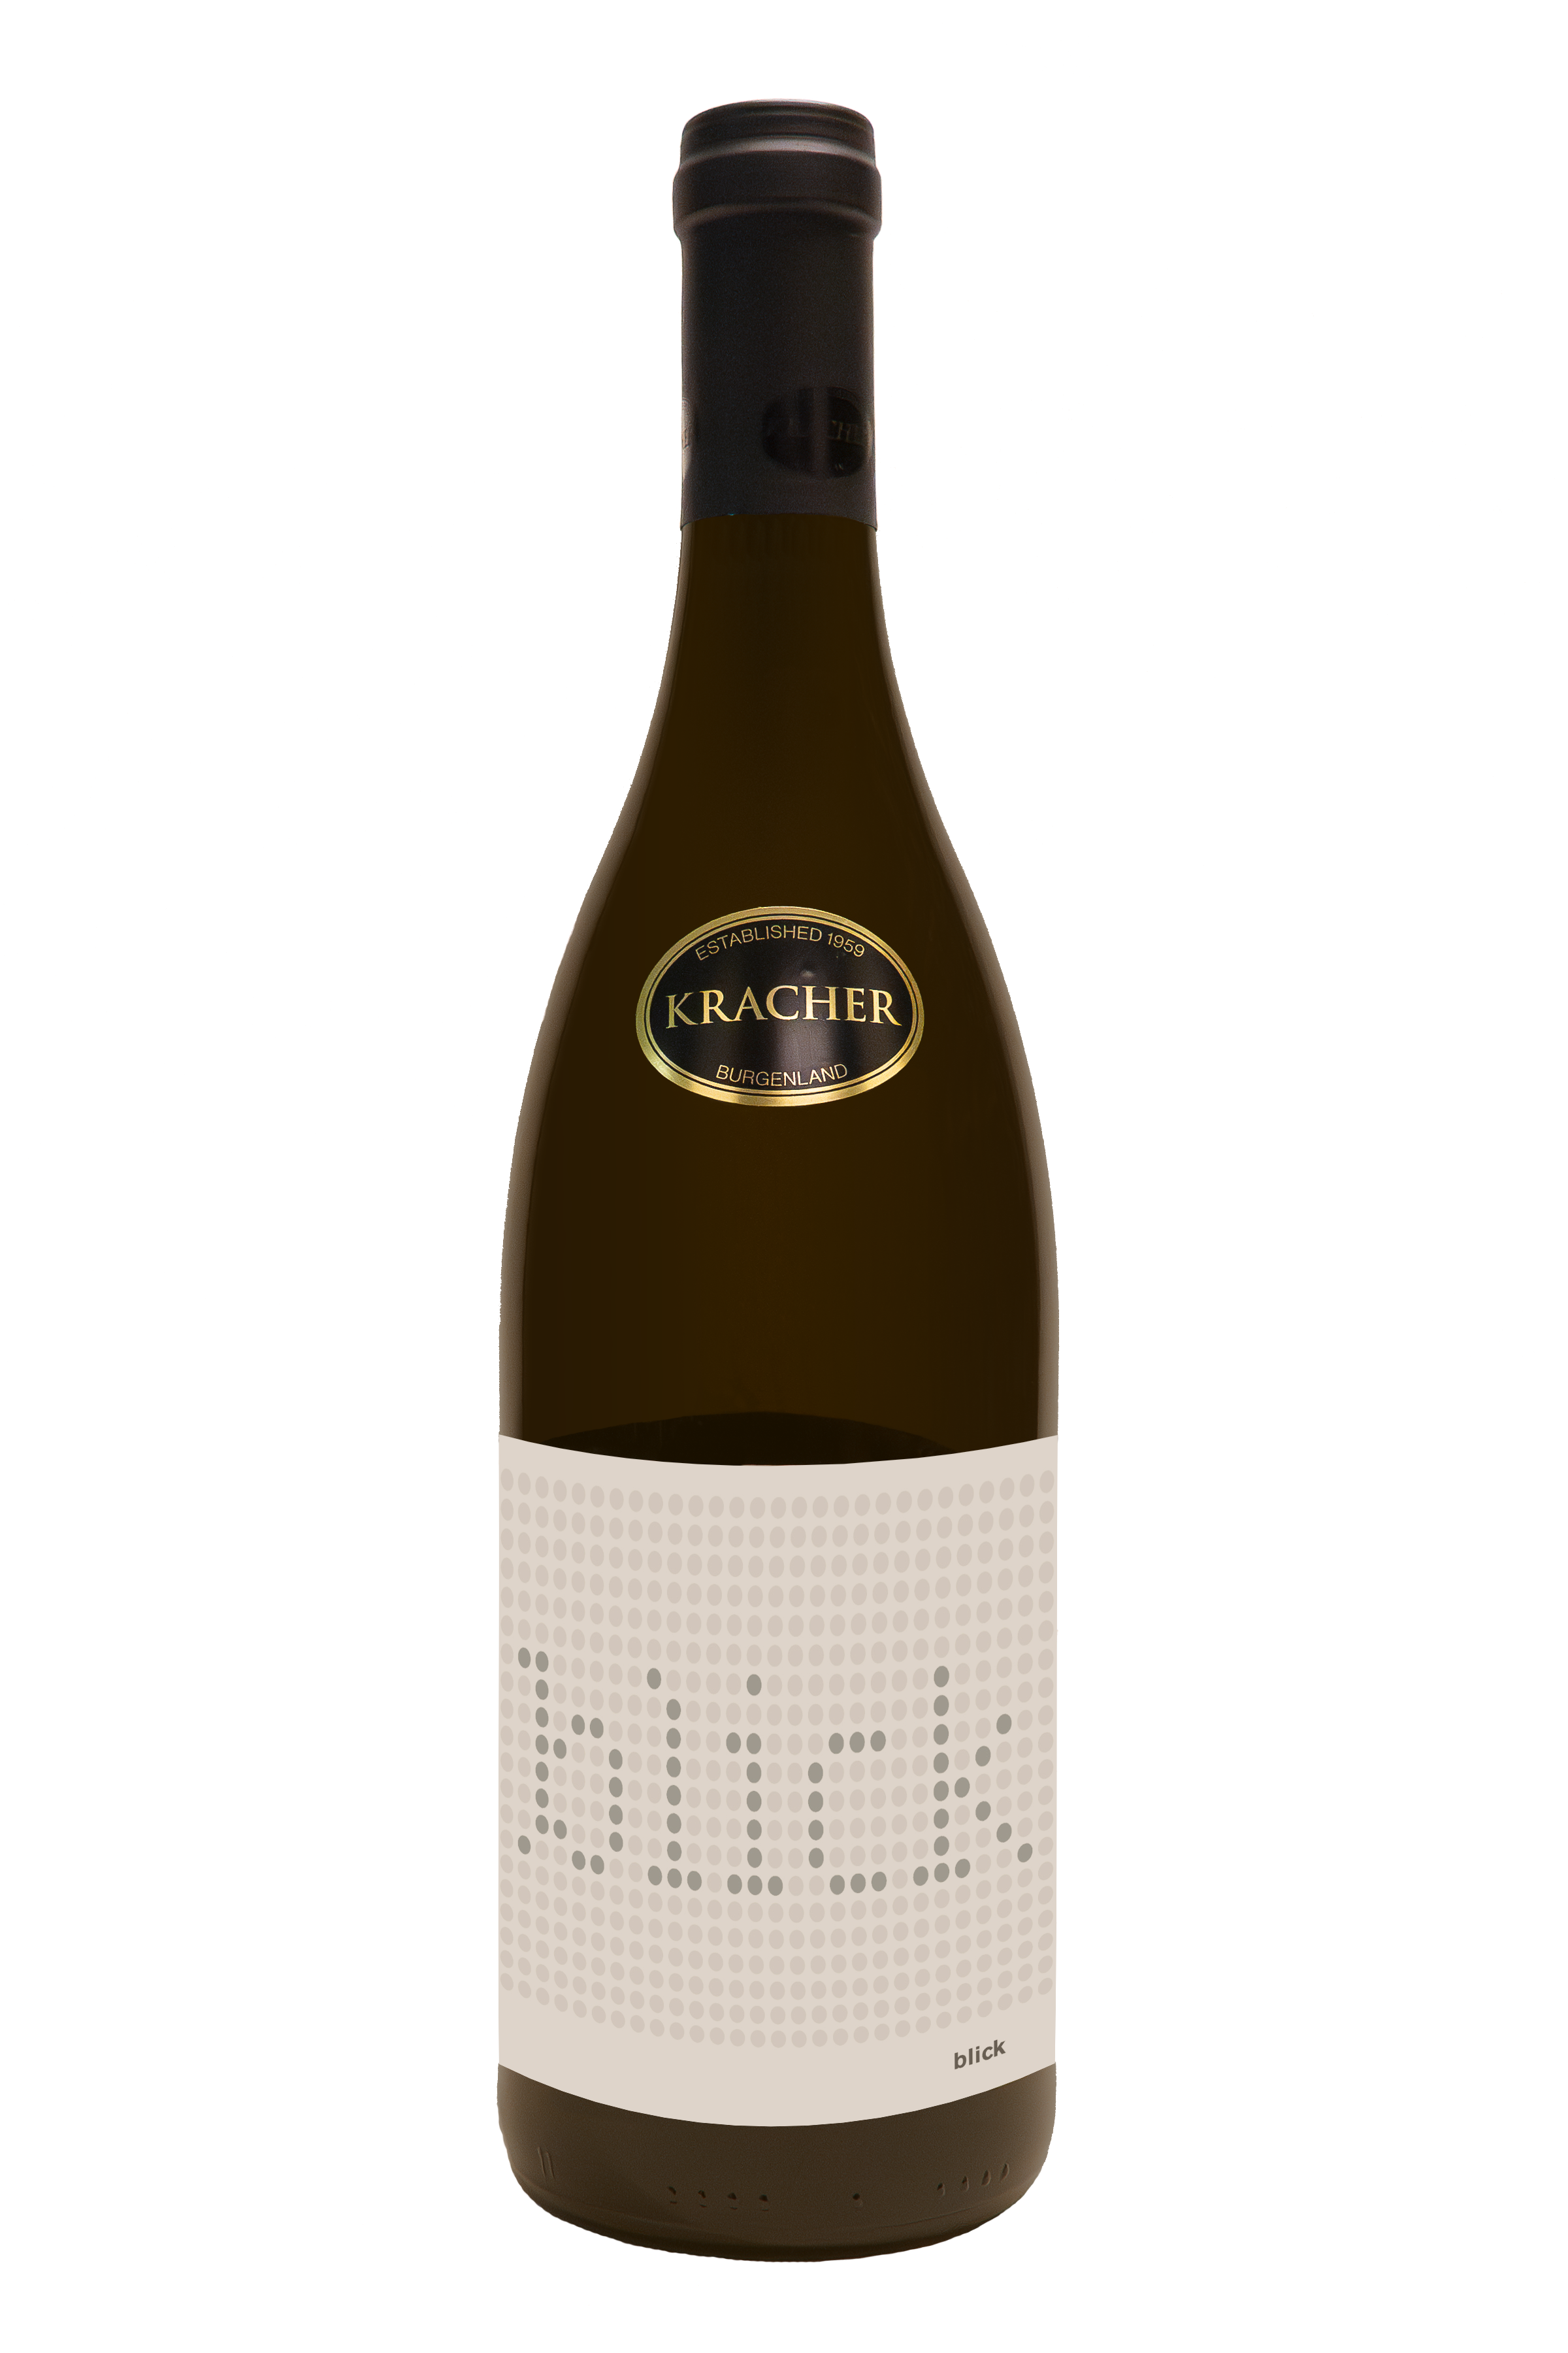 2017 Chardonnay Blick